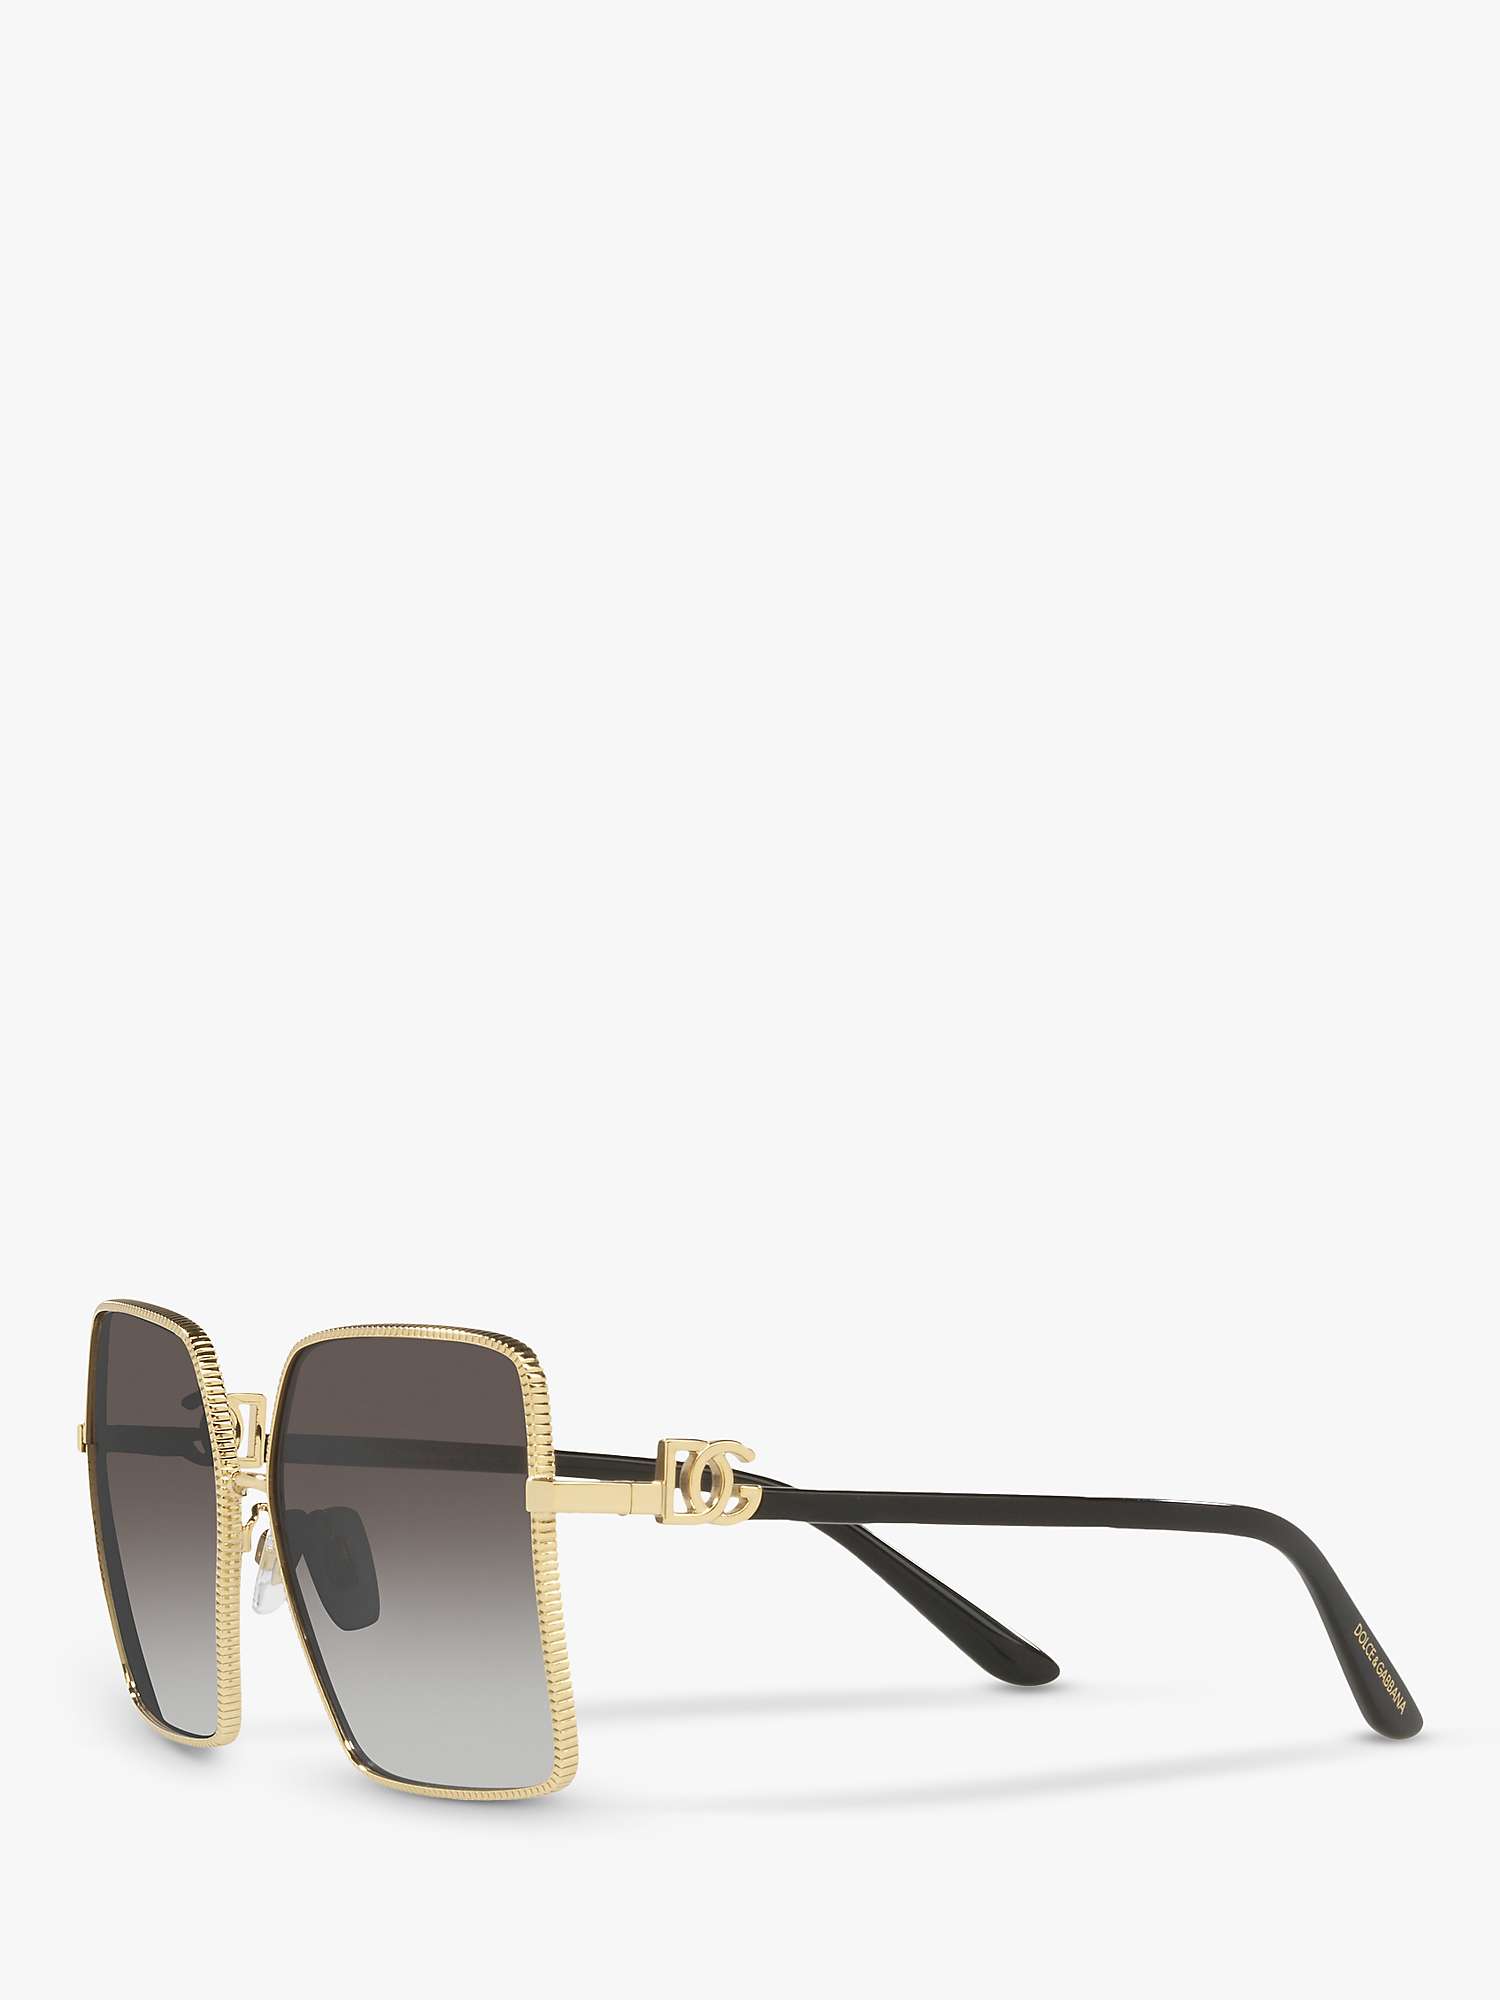 Buy Dolce & Gabbana DG227902 Women's Square Sunglasses, Gold/Grey Online at johnlewis.com